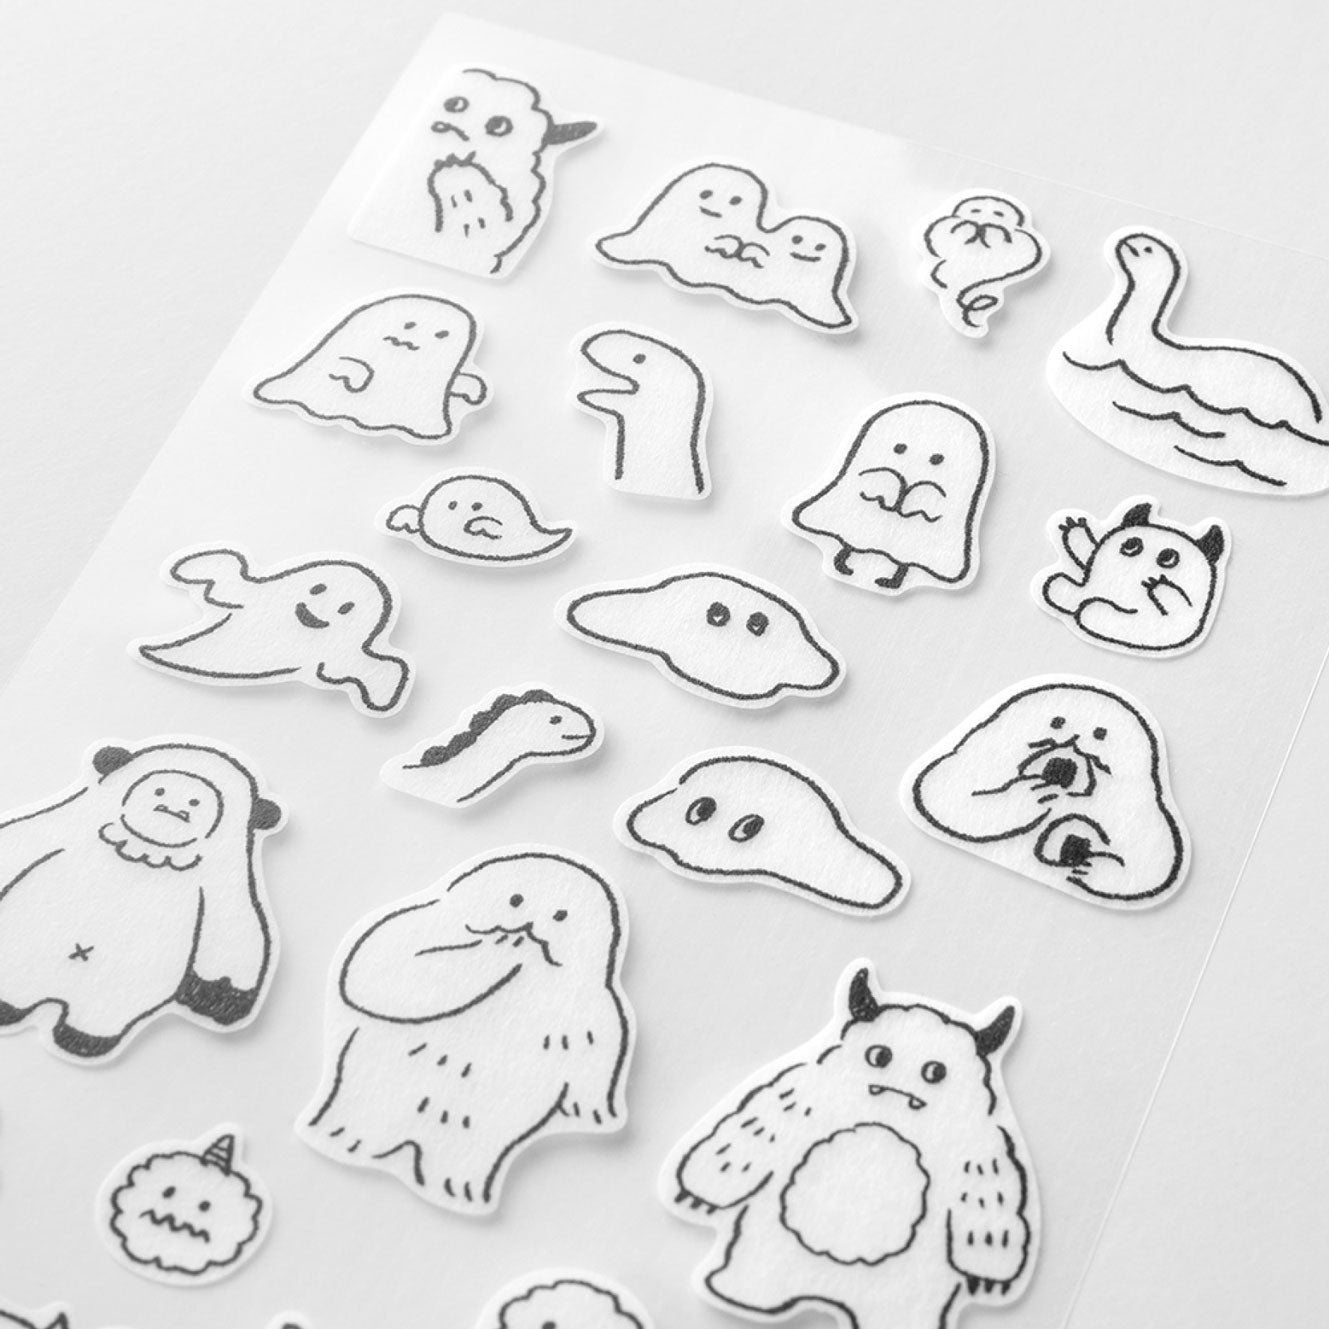 Midori - Planner Sticker - Sticker Collection - Monsters